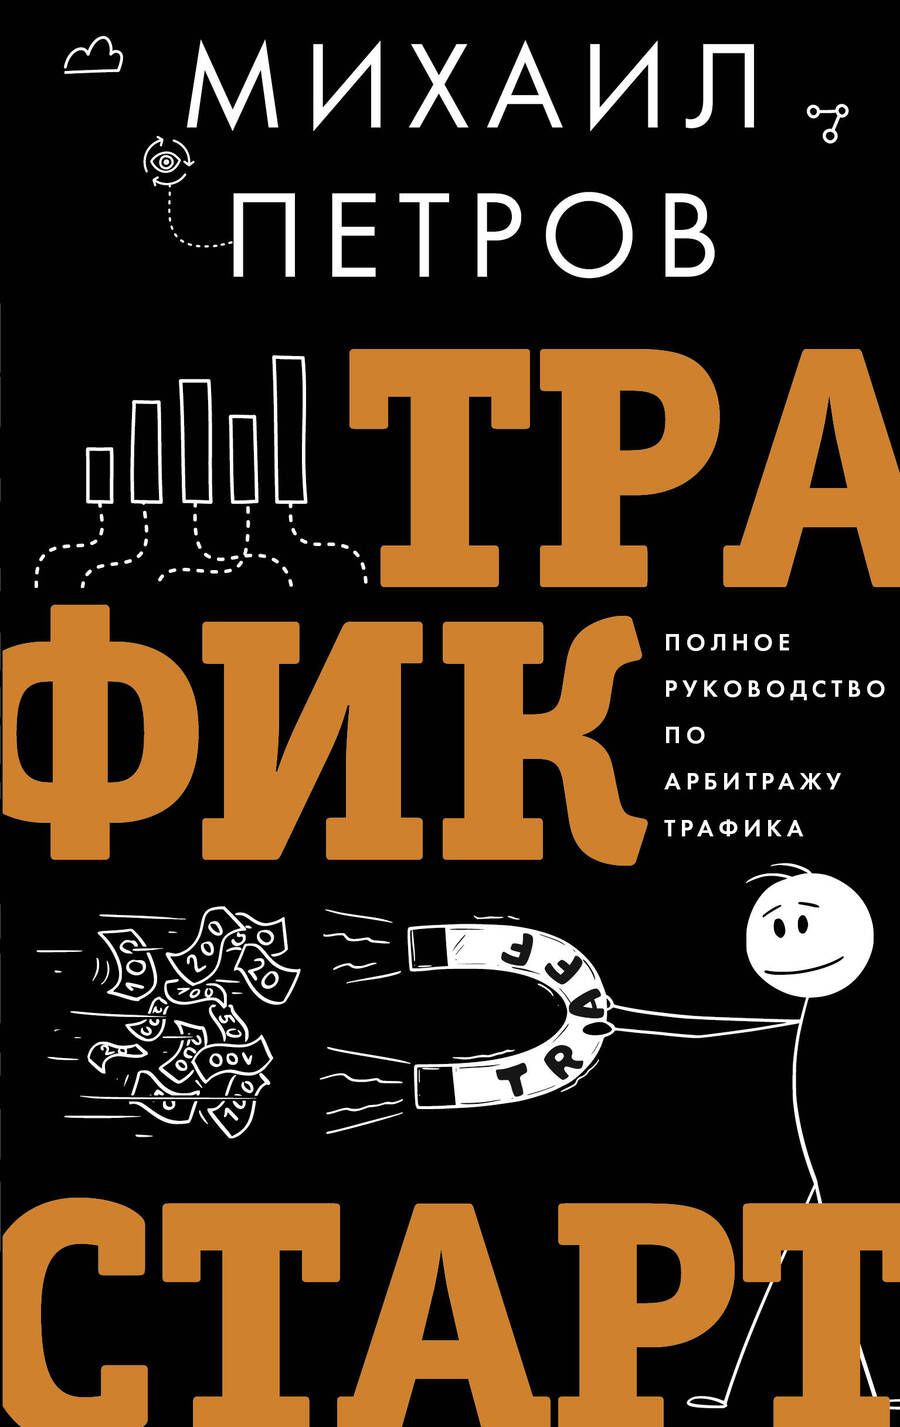 Обложка книги "Петров: Трафик. Старт. Полное руководство по арбитражу трафика"